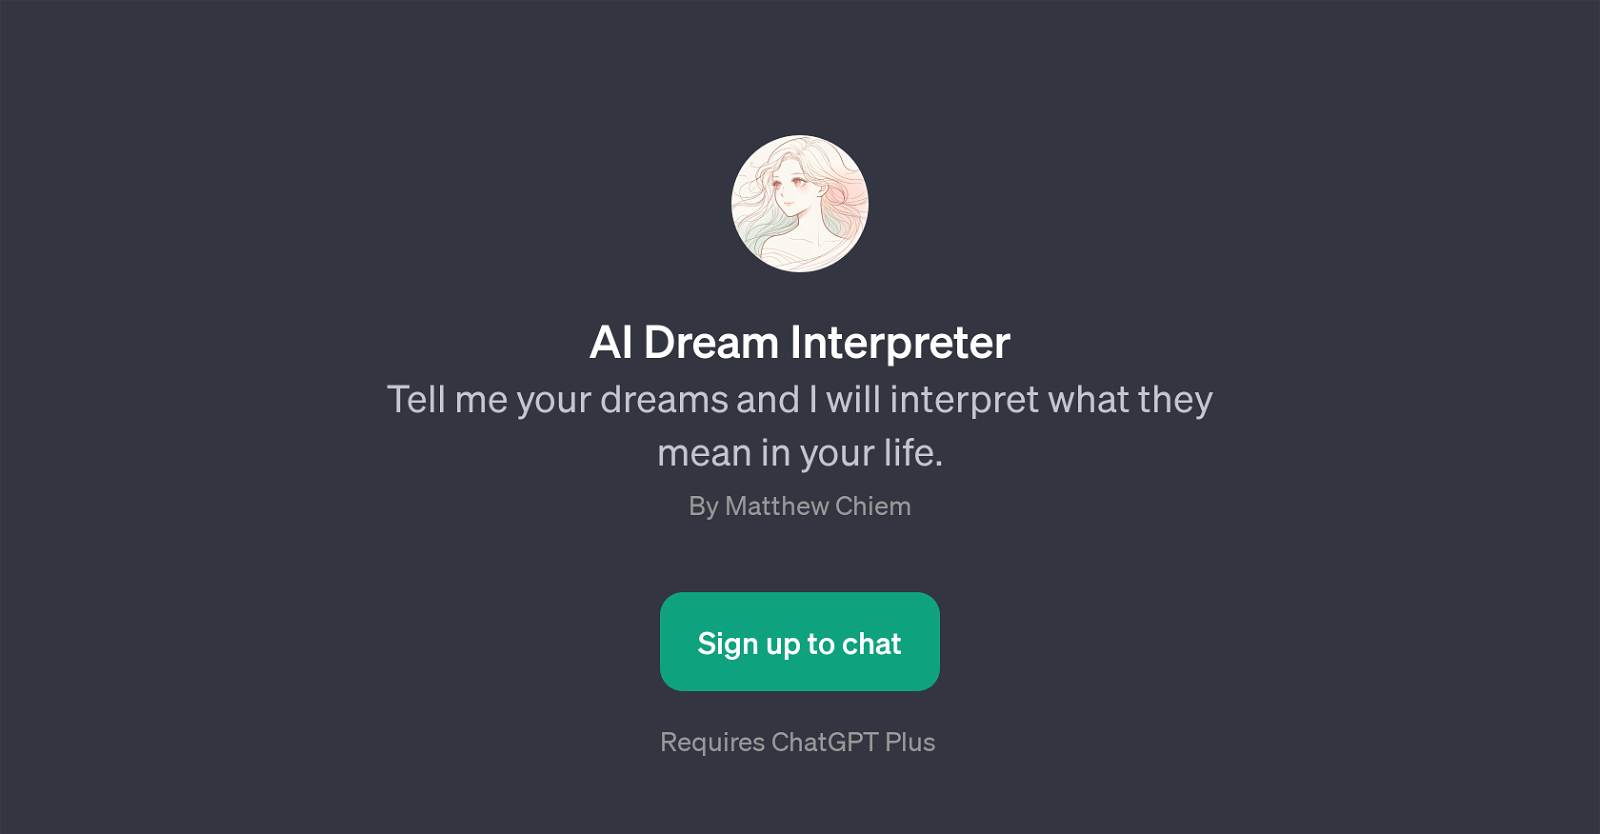 AI Dream Interpreter website